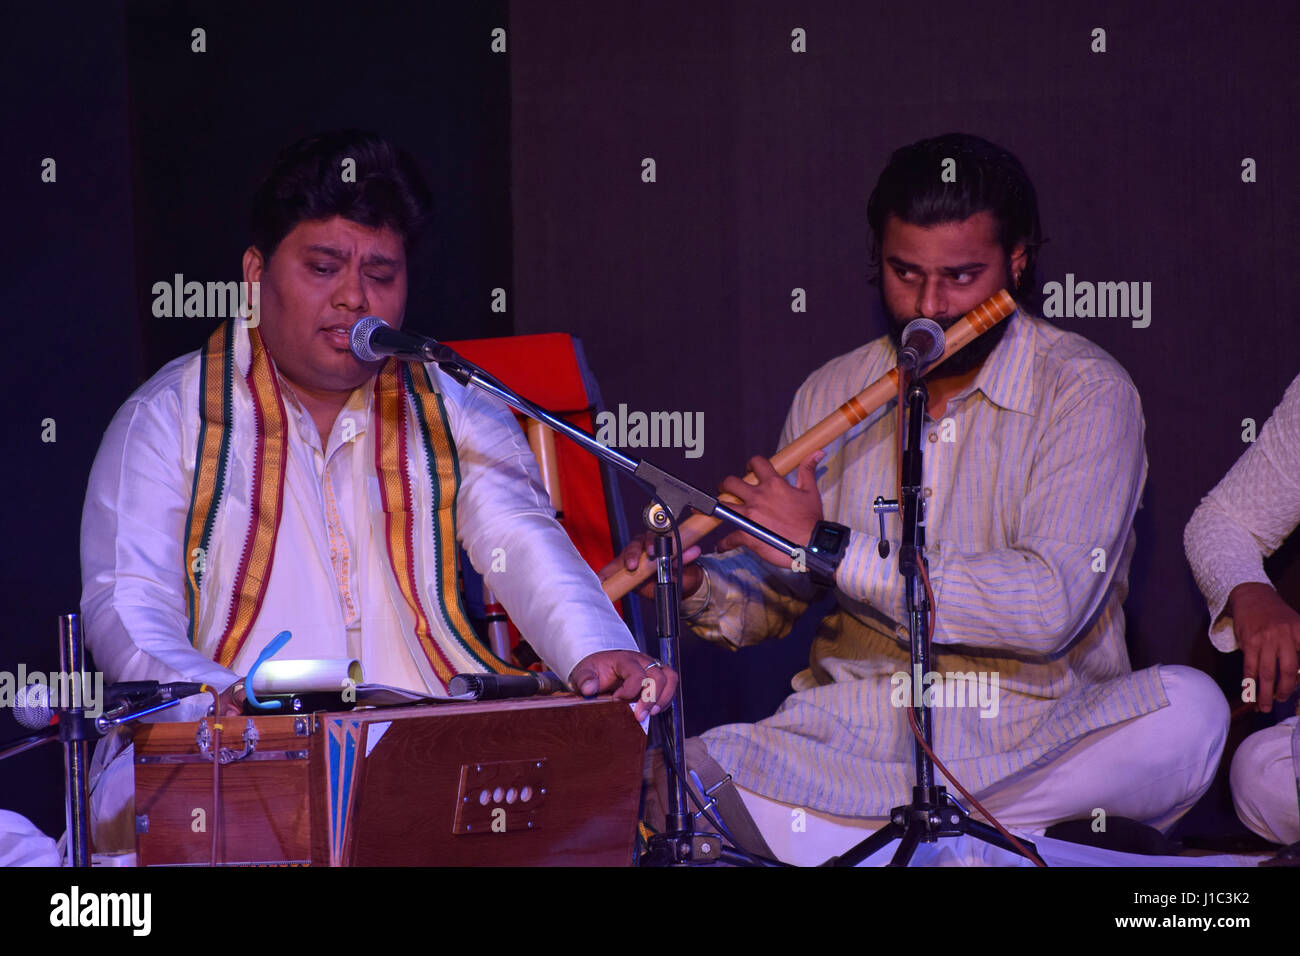 Band playing traditional Indian musical instruments, Pune, Maharashtra. Stock Photo